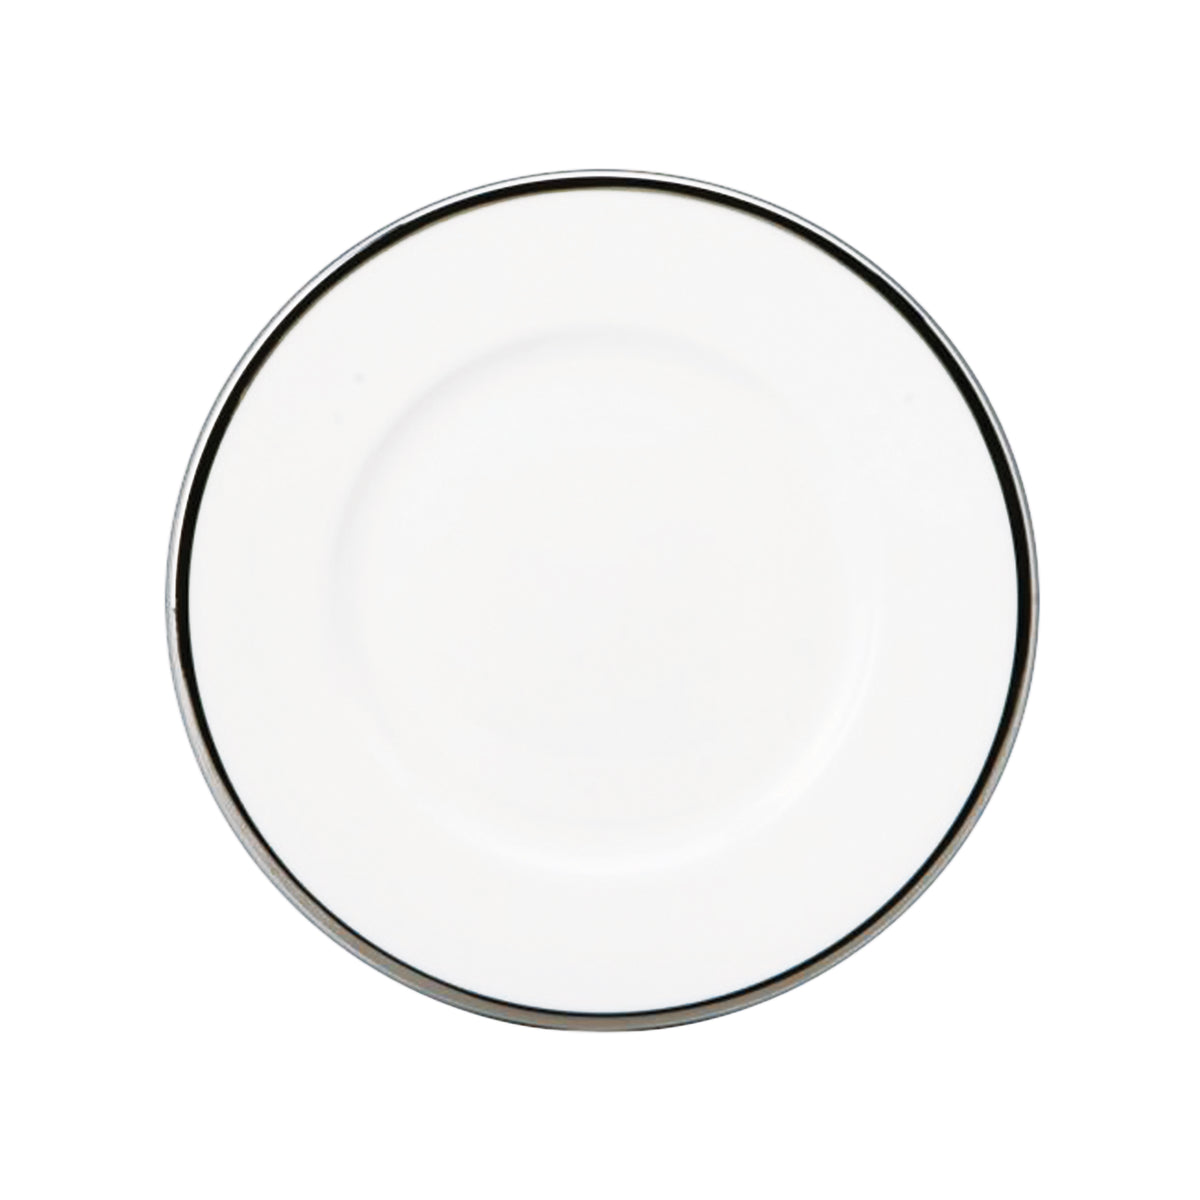 Prouna Comet Platinum Salad / Dessert Plate White Background Photo